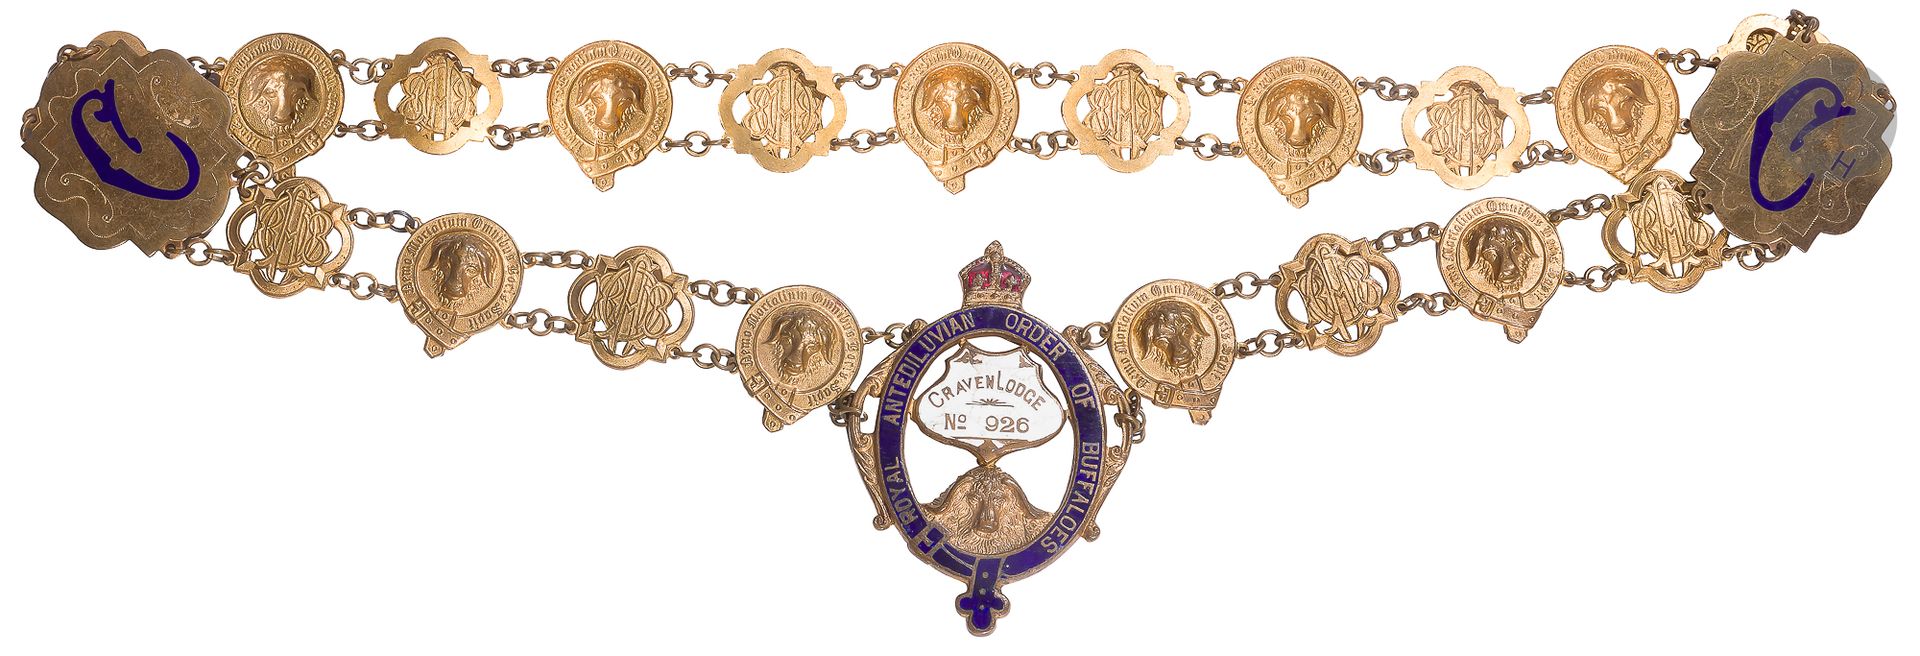 Null "Royal Antediluvian Order of Buffaloes"
Grande collana della confraternita &hellip;